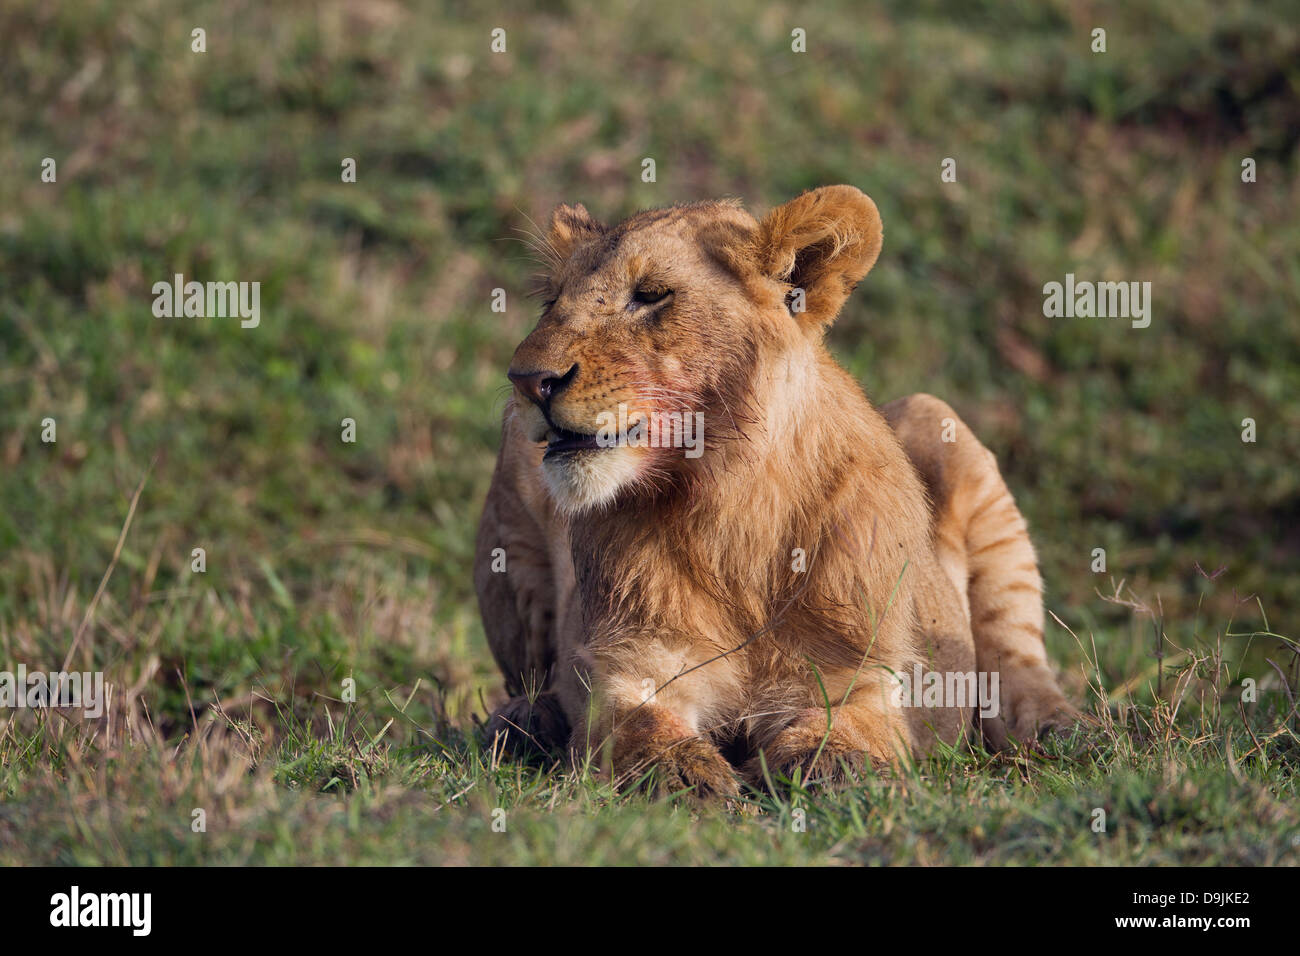 Lion close-up portrait, Masai Mara, Kenya Stock Photo